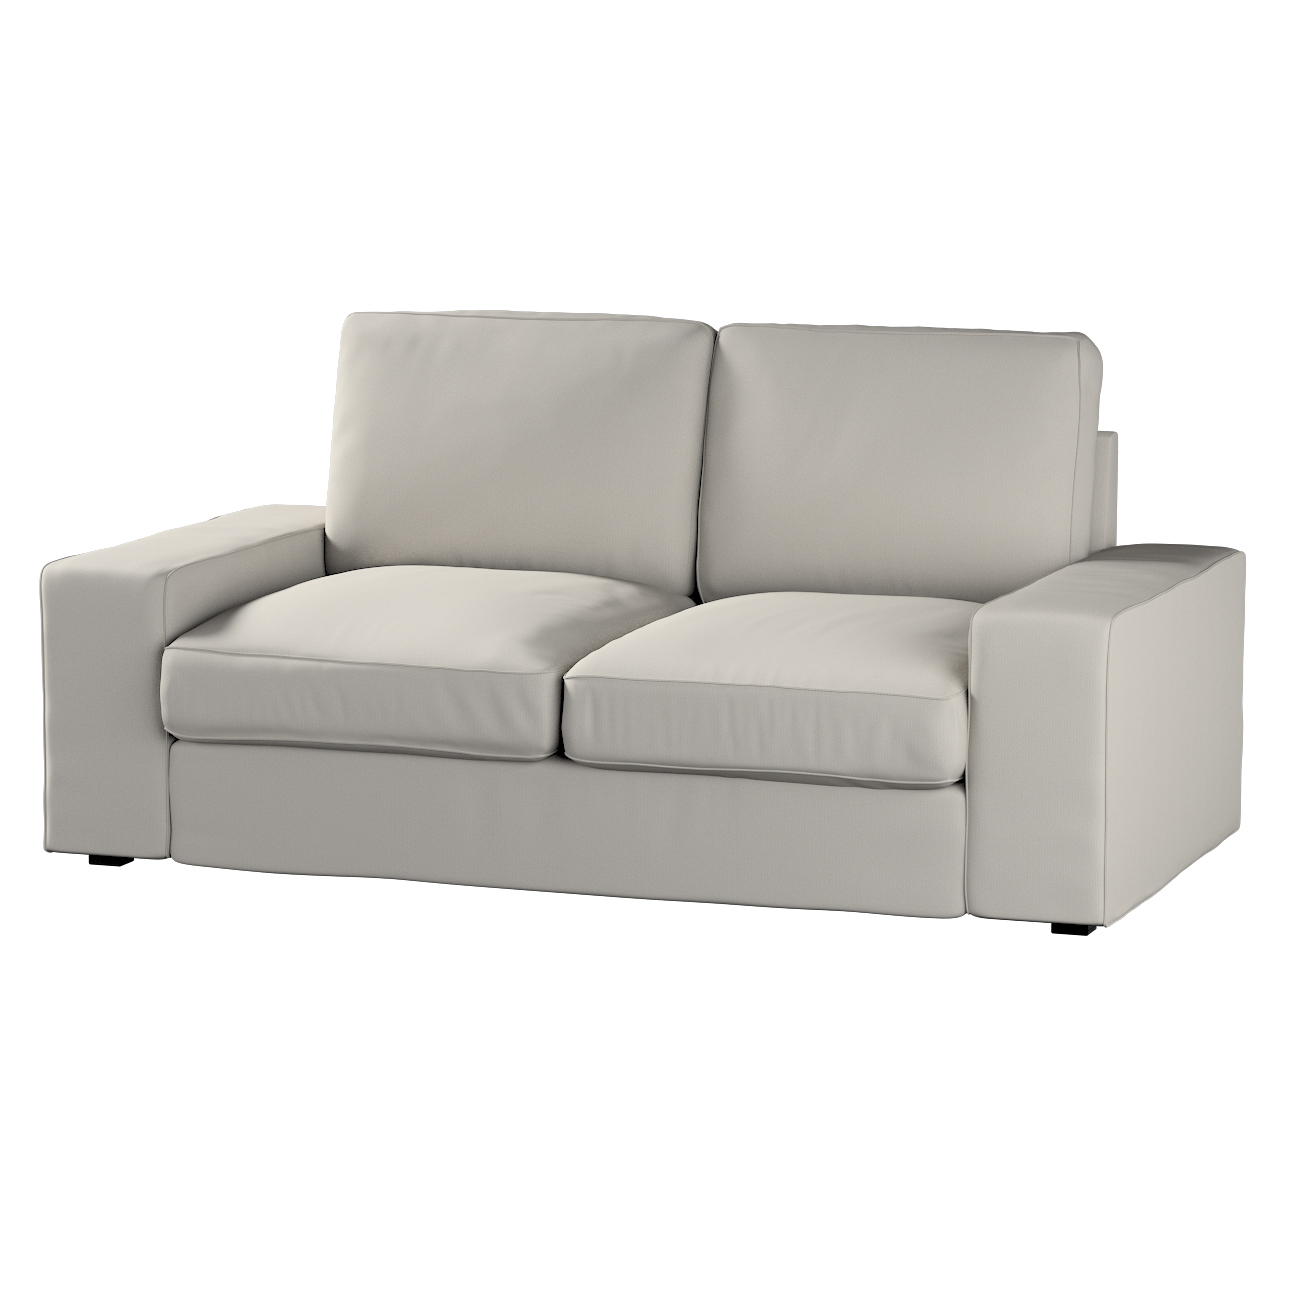 Bezug für Kivik 2-Sitzer Sofa, grau, Bezug für Sofa Kivik 2-Sitzer, Living günstig online kaufen